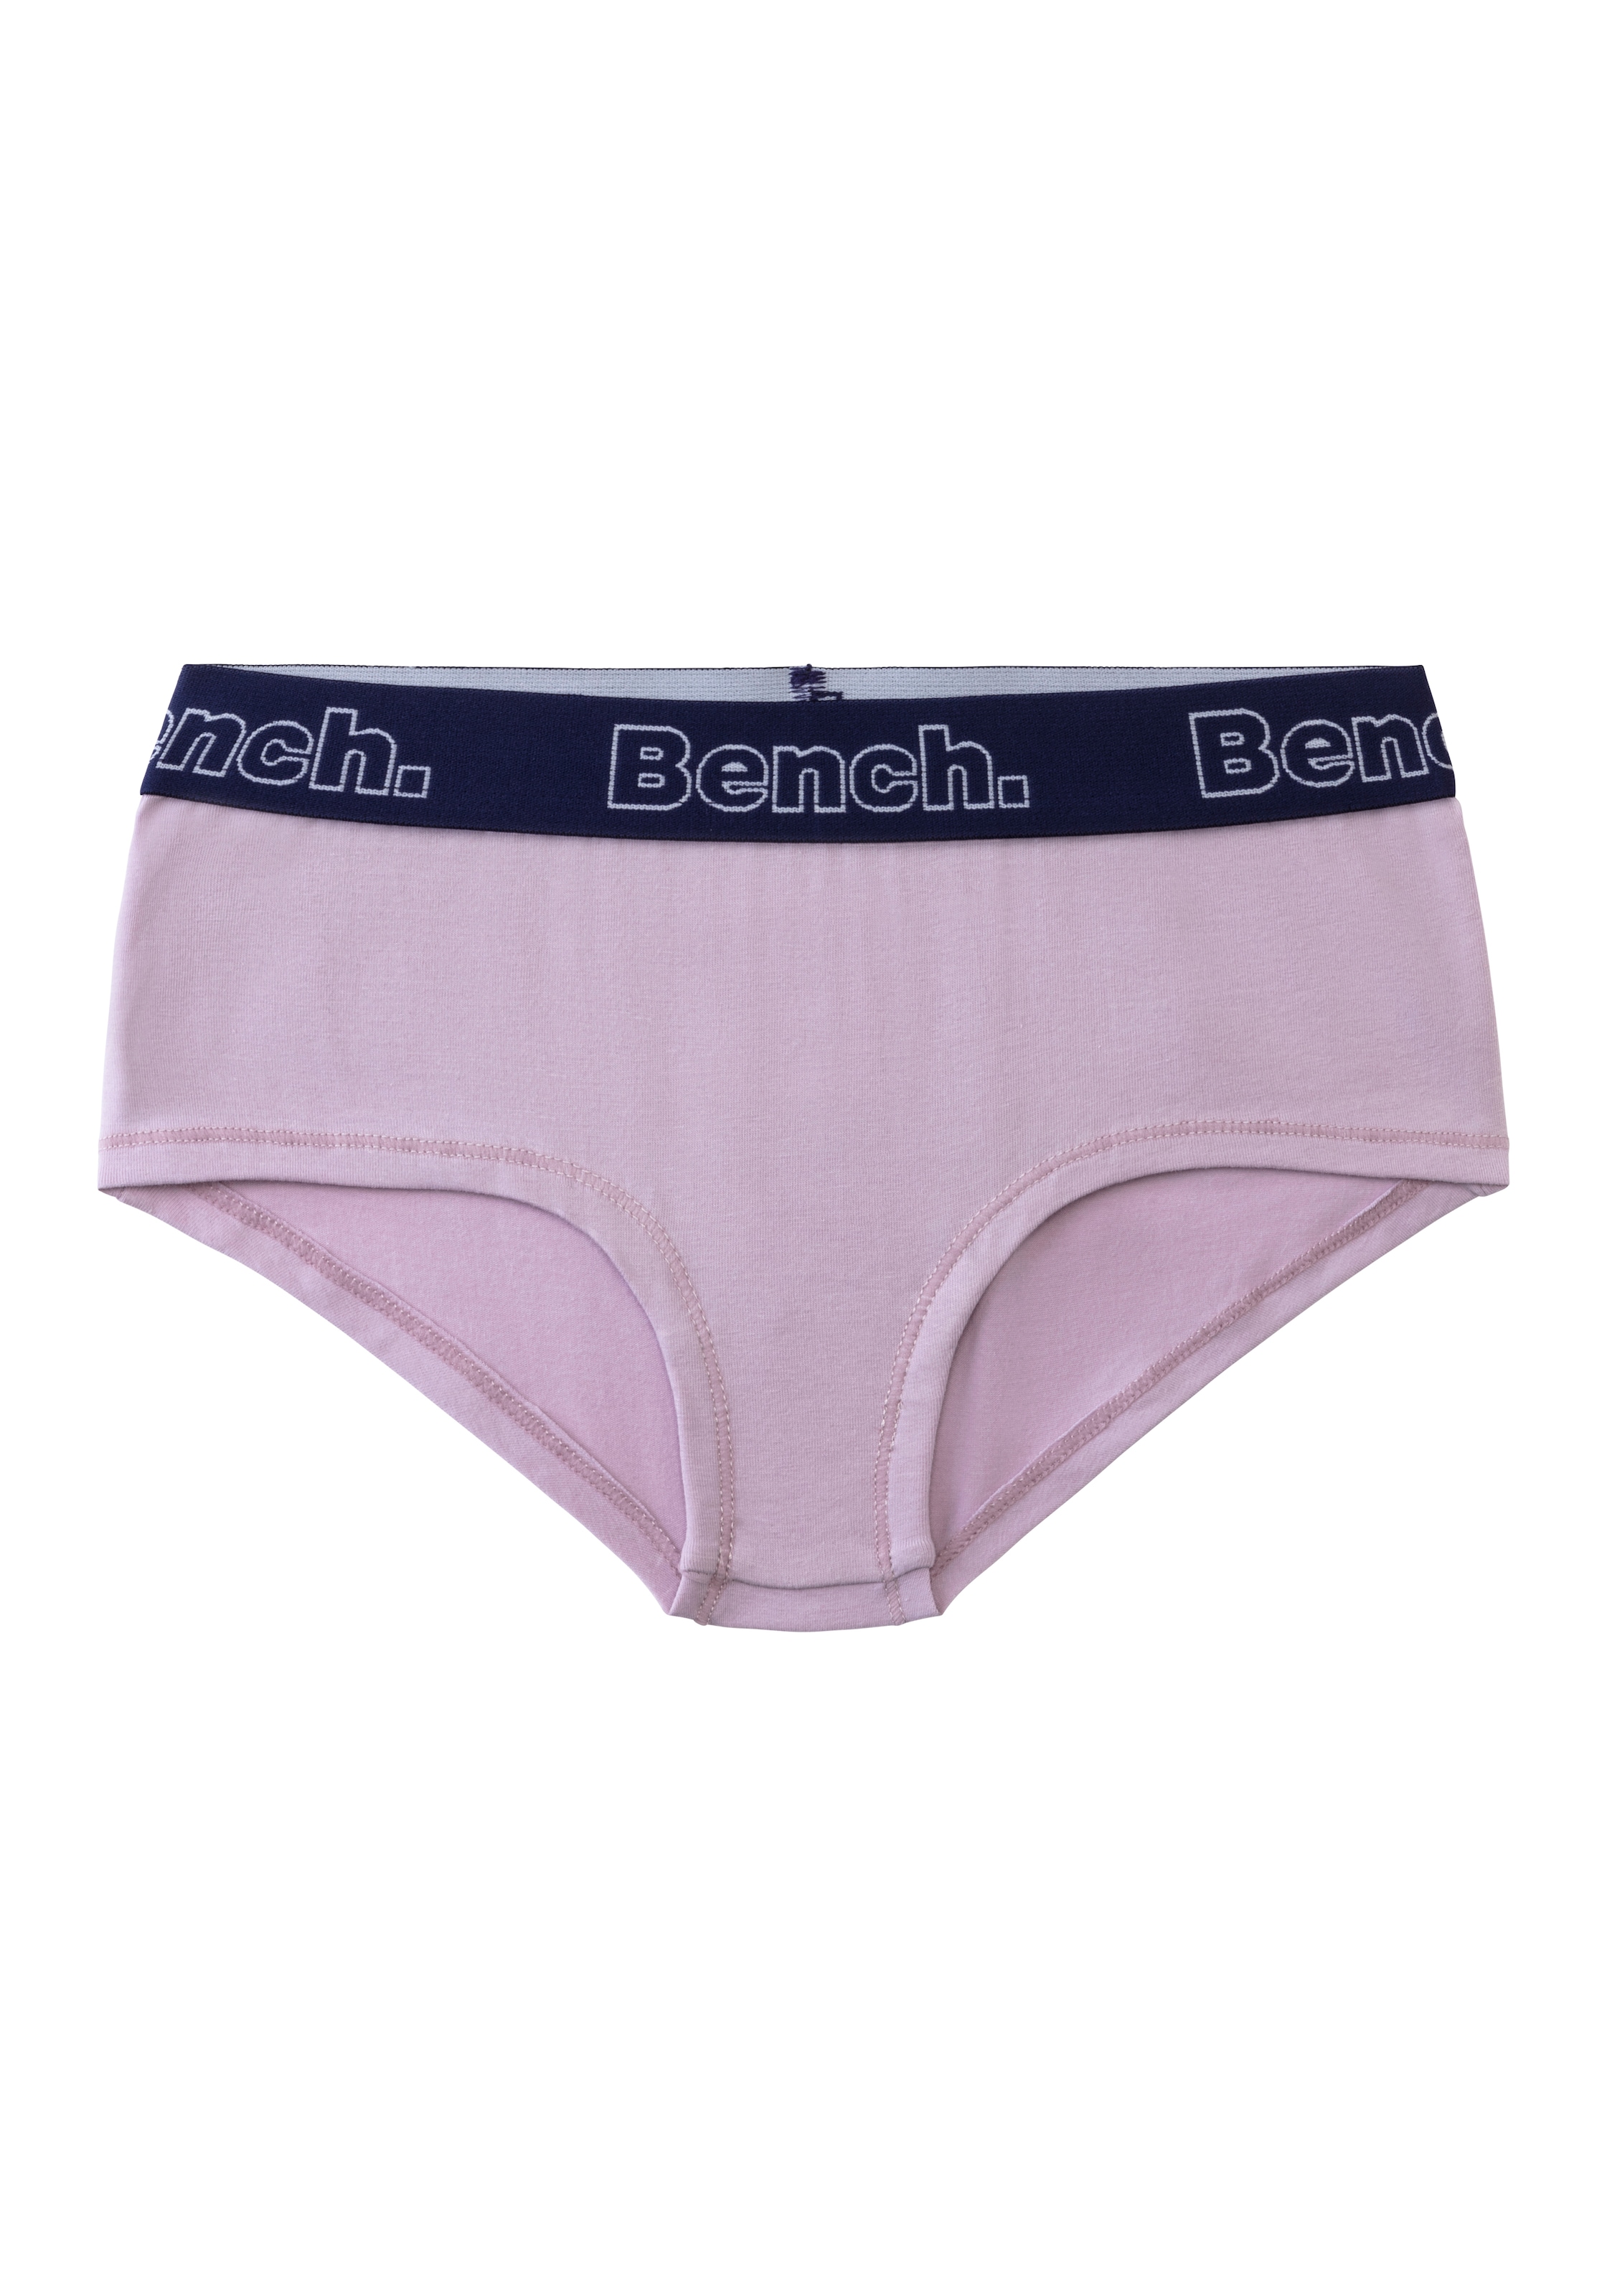 Bench. Panty, Shop Online 3 St.), kontrastfarbigem Jelmoli-Versand (Packung, | mit Webbund